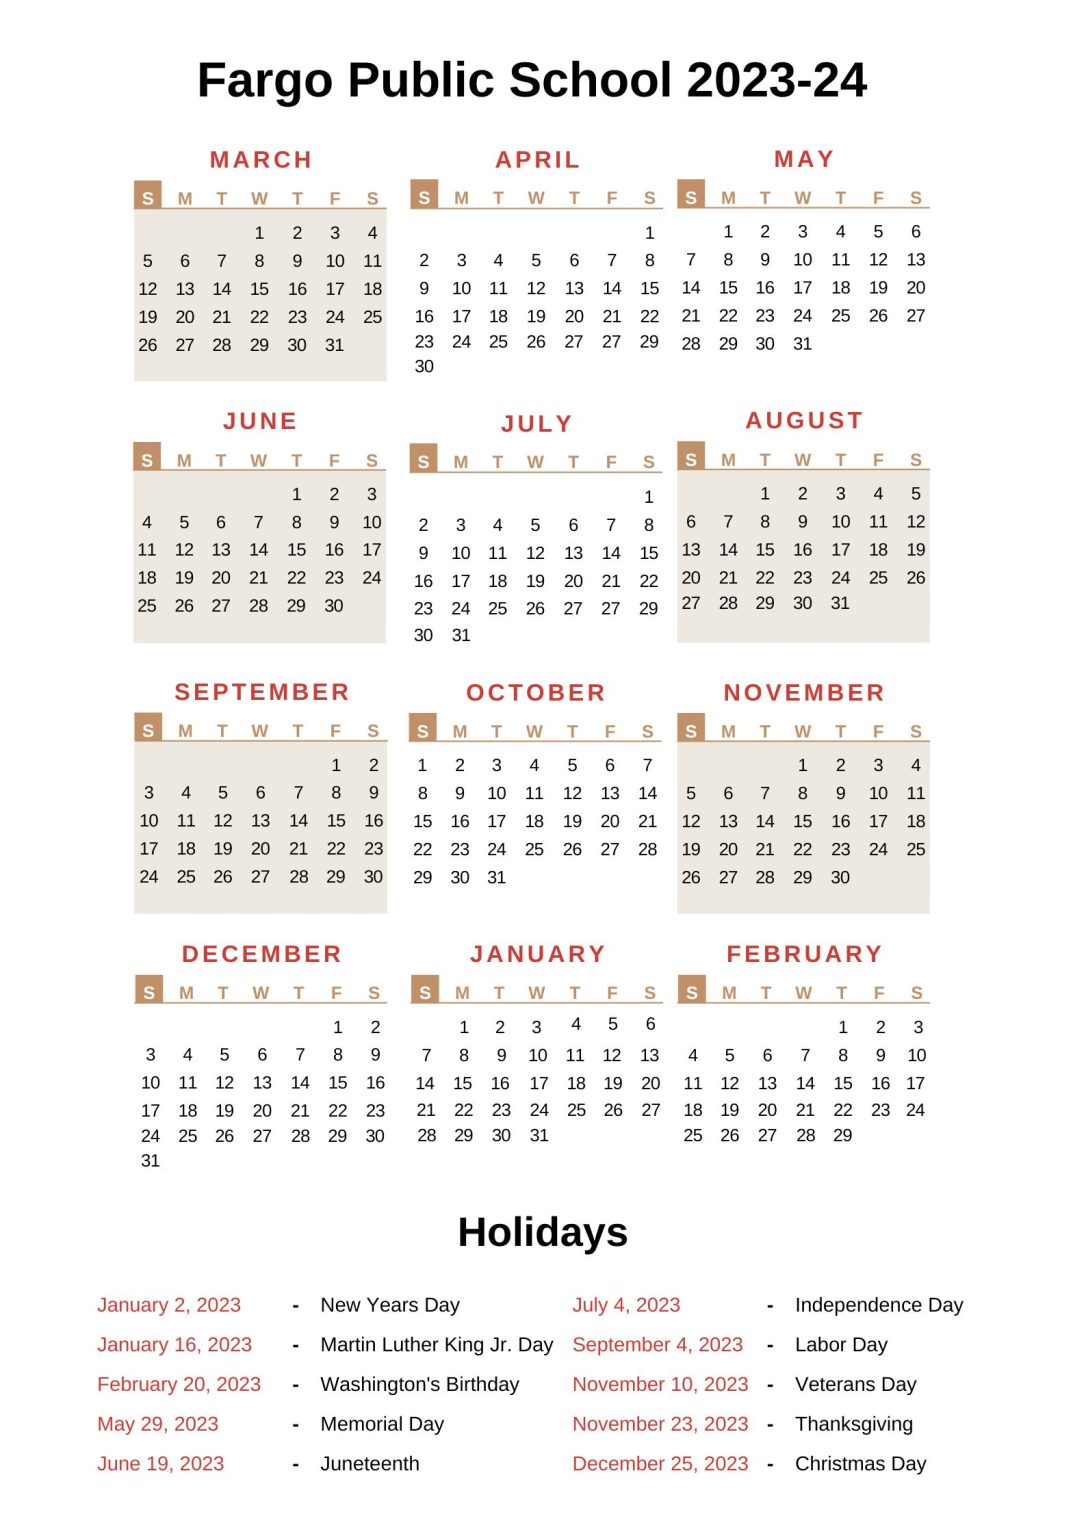 Fargo Public Schools Calendar [FPS] 202324 With Holidays